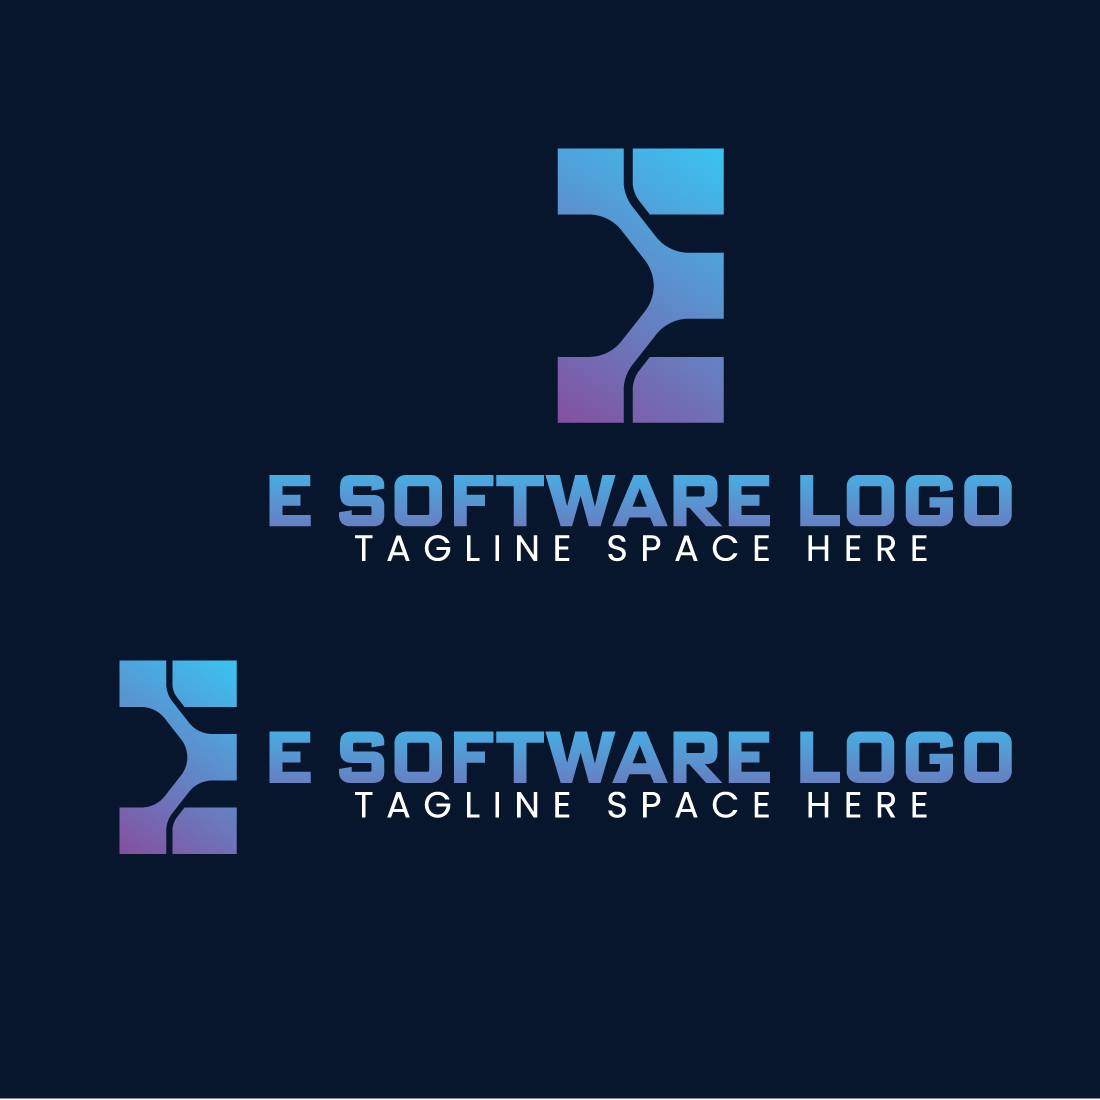 E software logo Brand Identity Logo Template preview image.